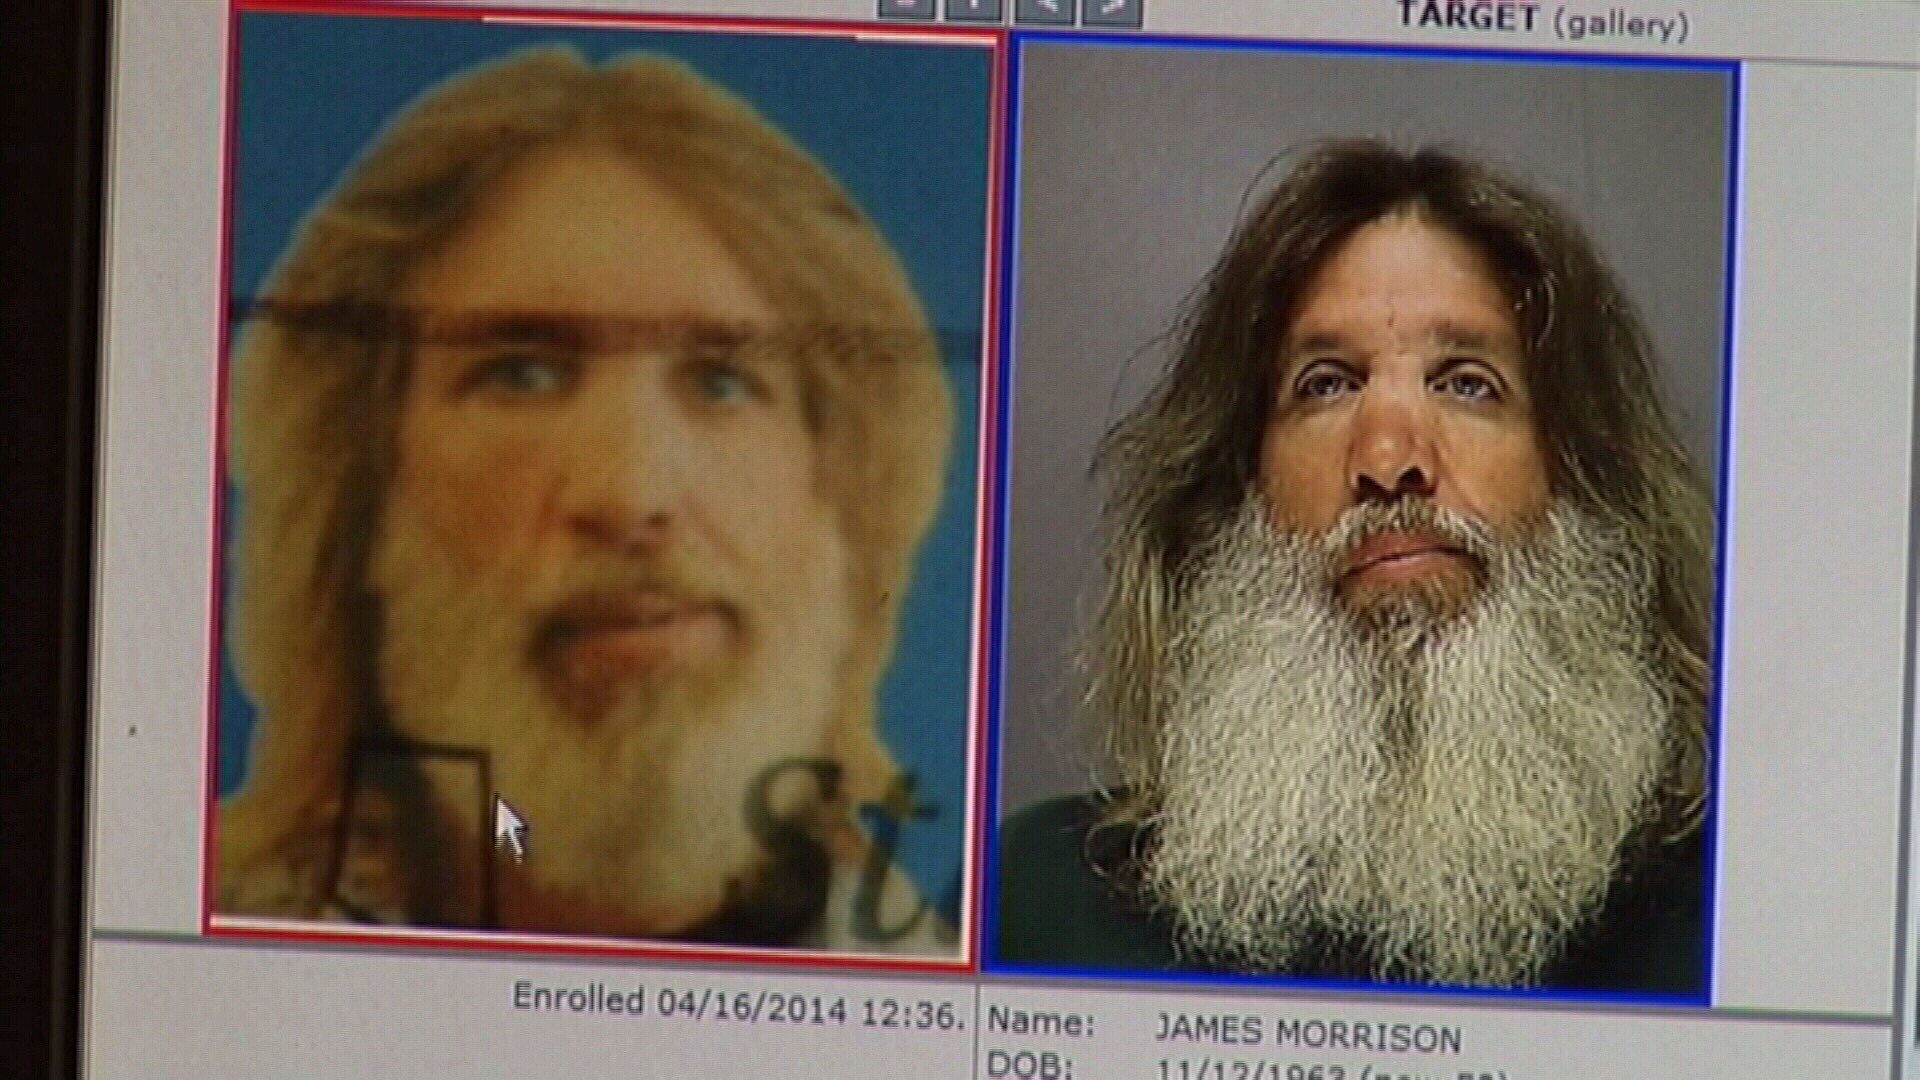 Daytona Beach police utilizing facial recognition to capture suspected criminals